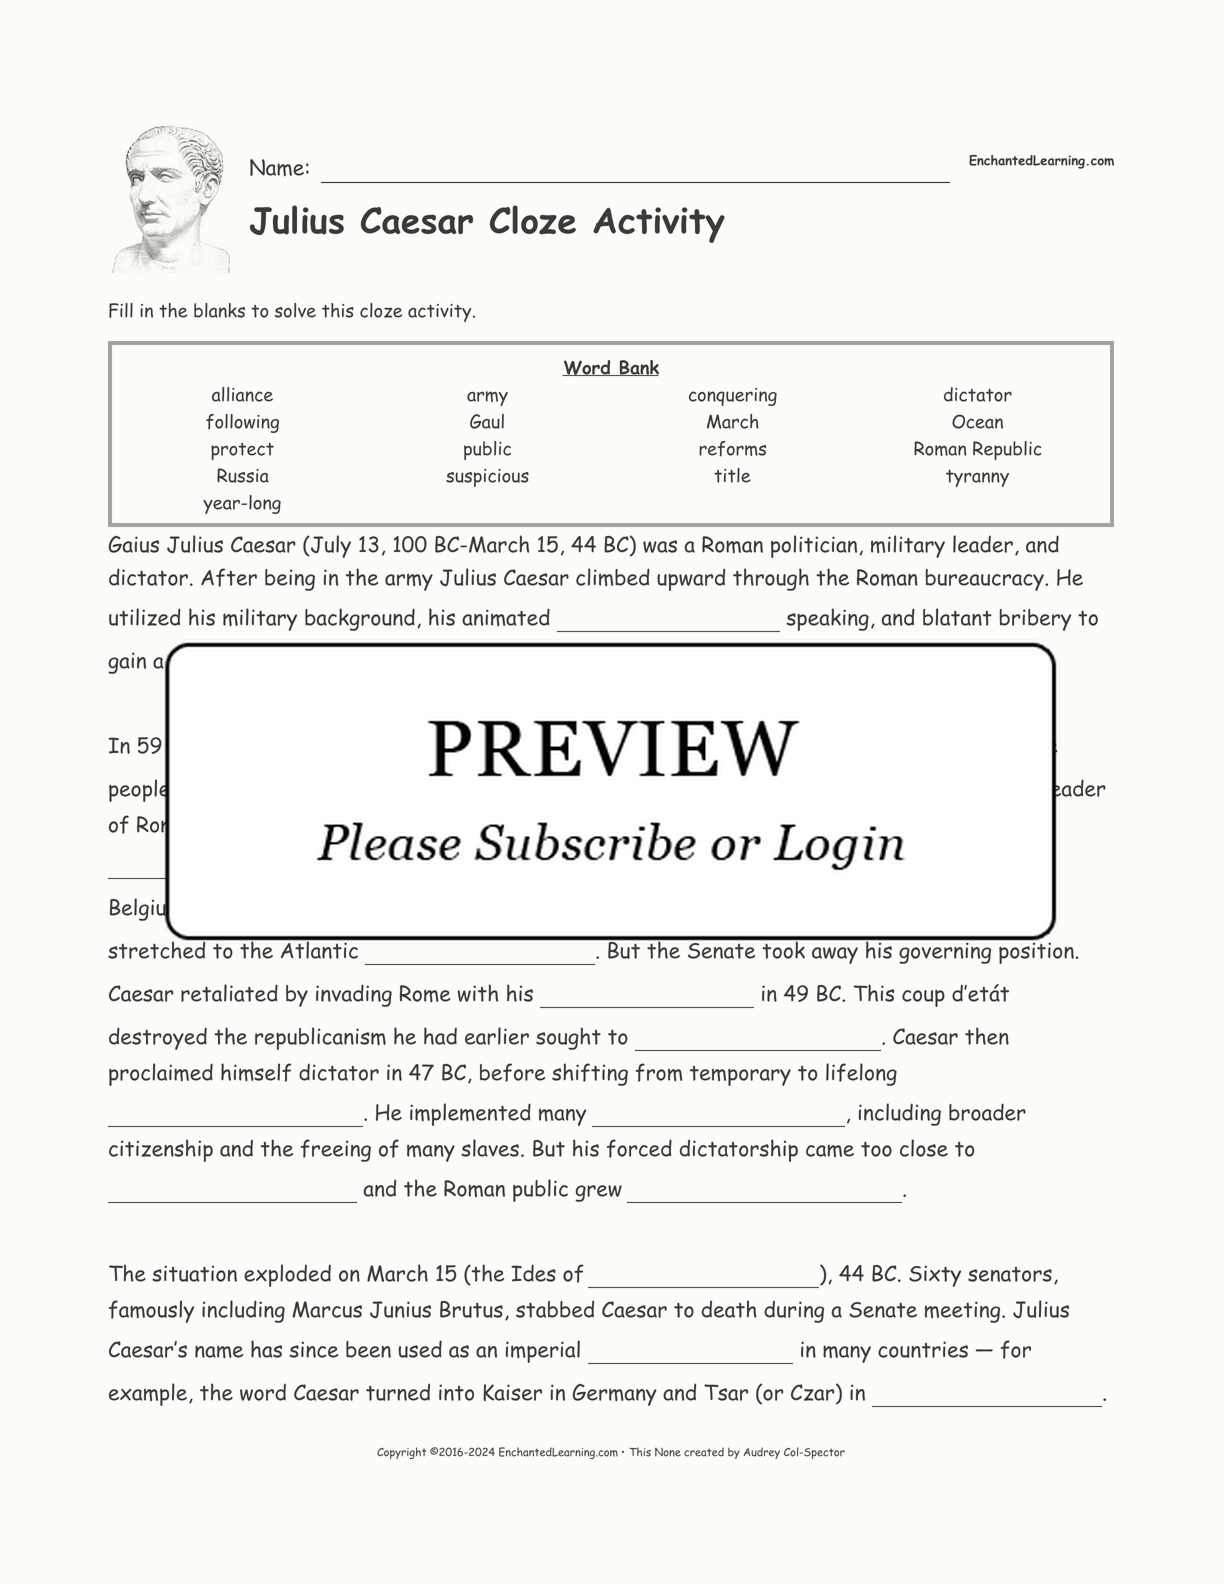 Julius Caesar Cloze Activity interactive worksheet page 1